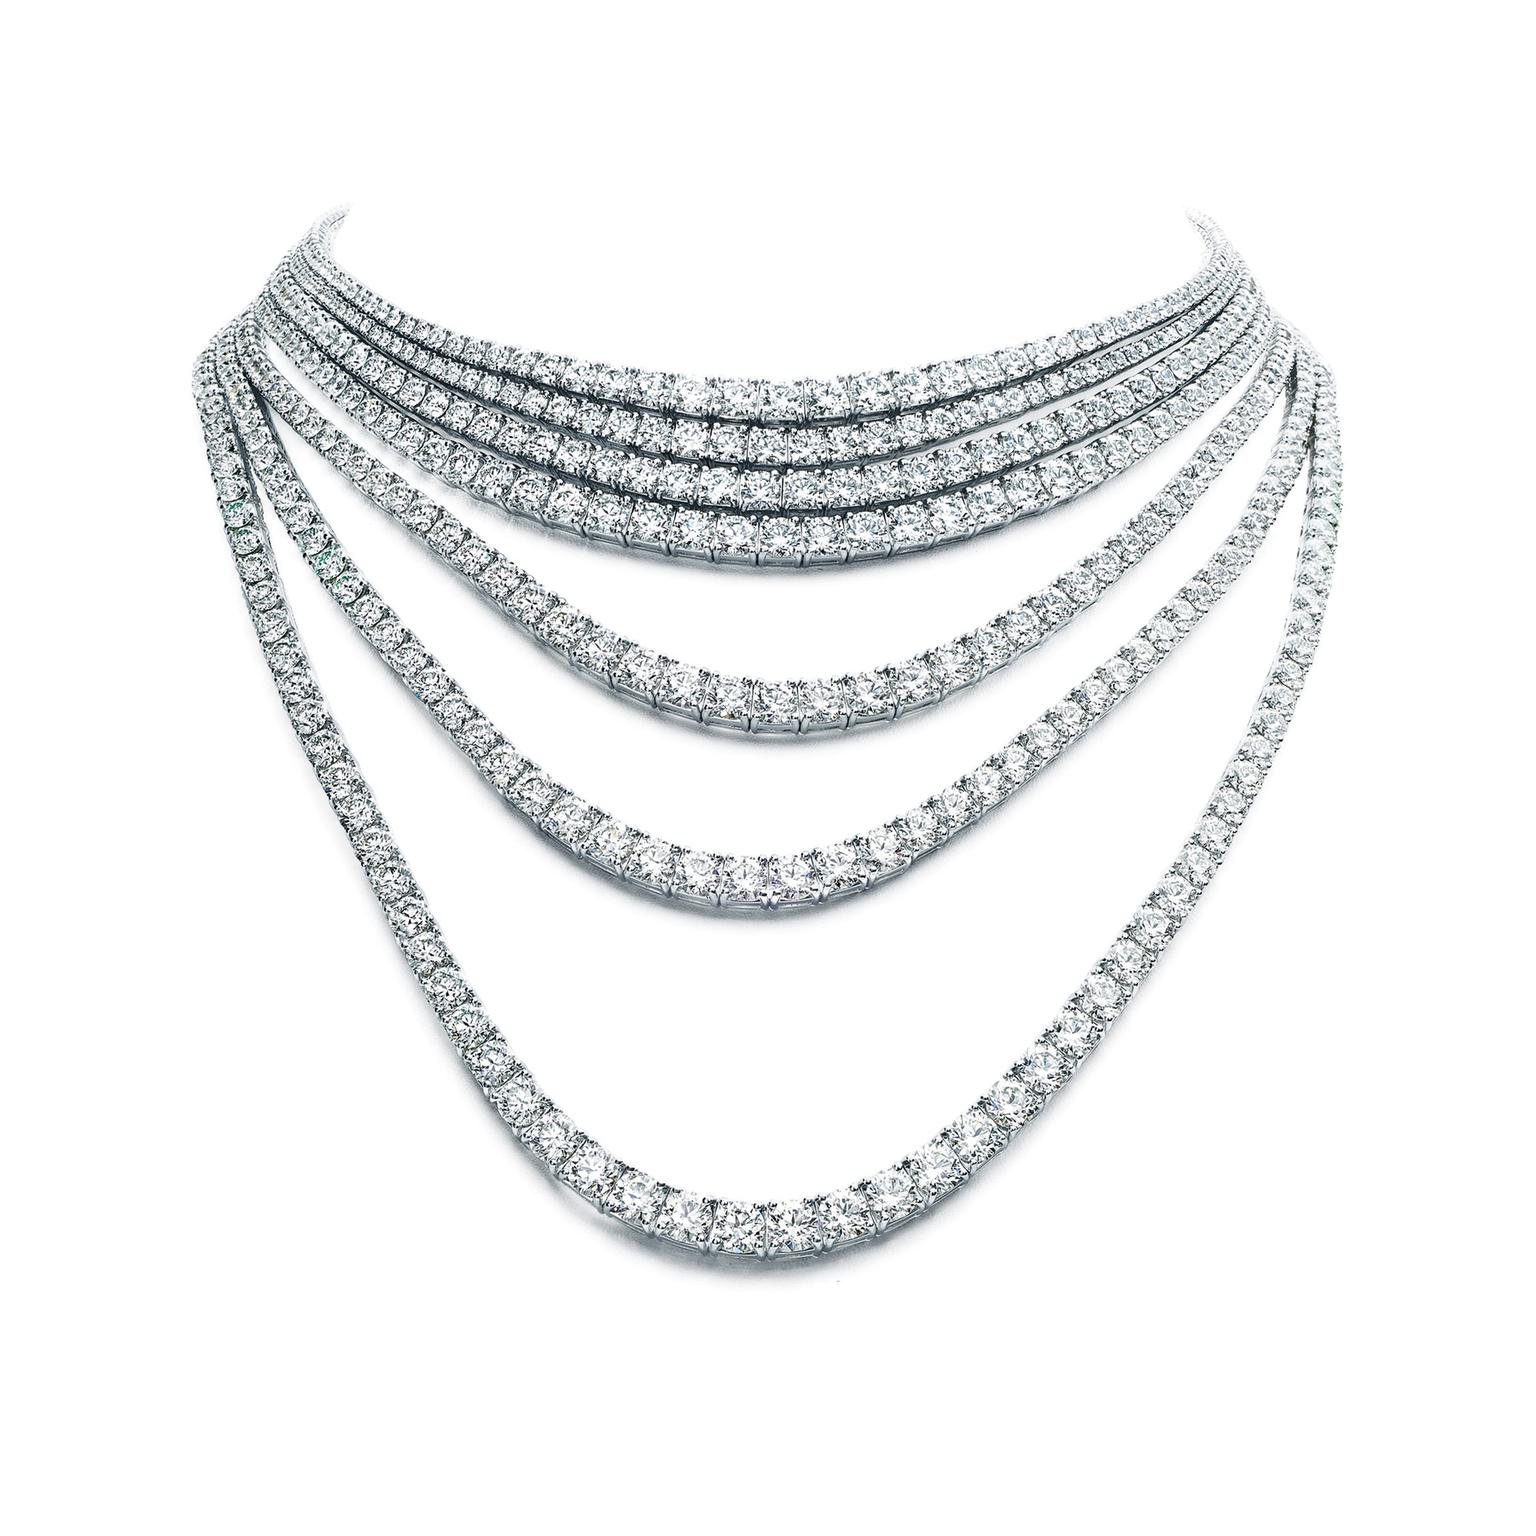 TIFFANY & CO. The 47-carat Morganite & Diamond Necklace @frenchbluediamond  on Instagram